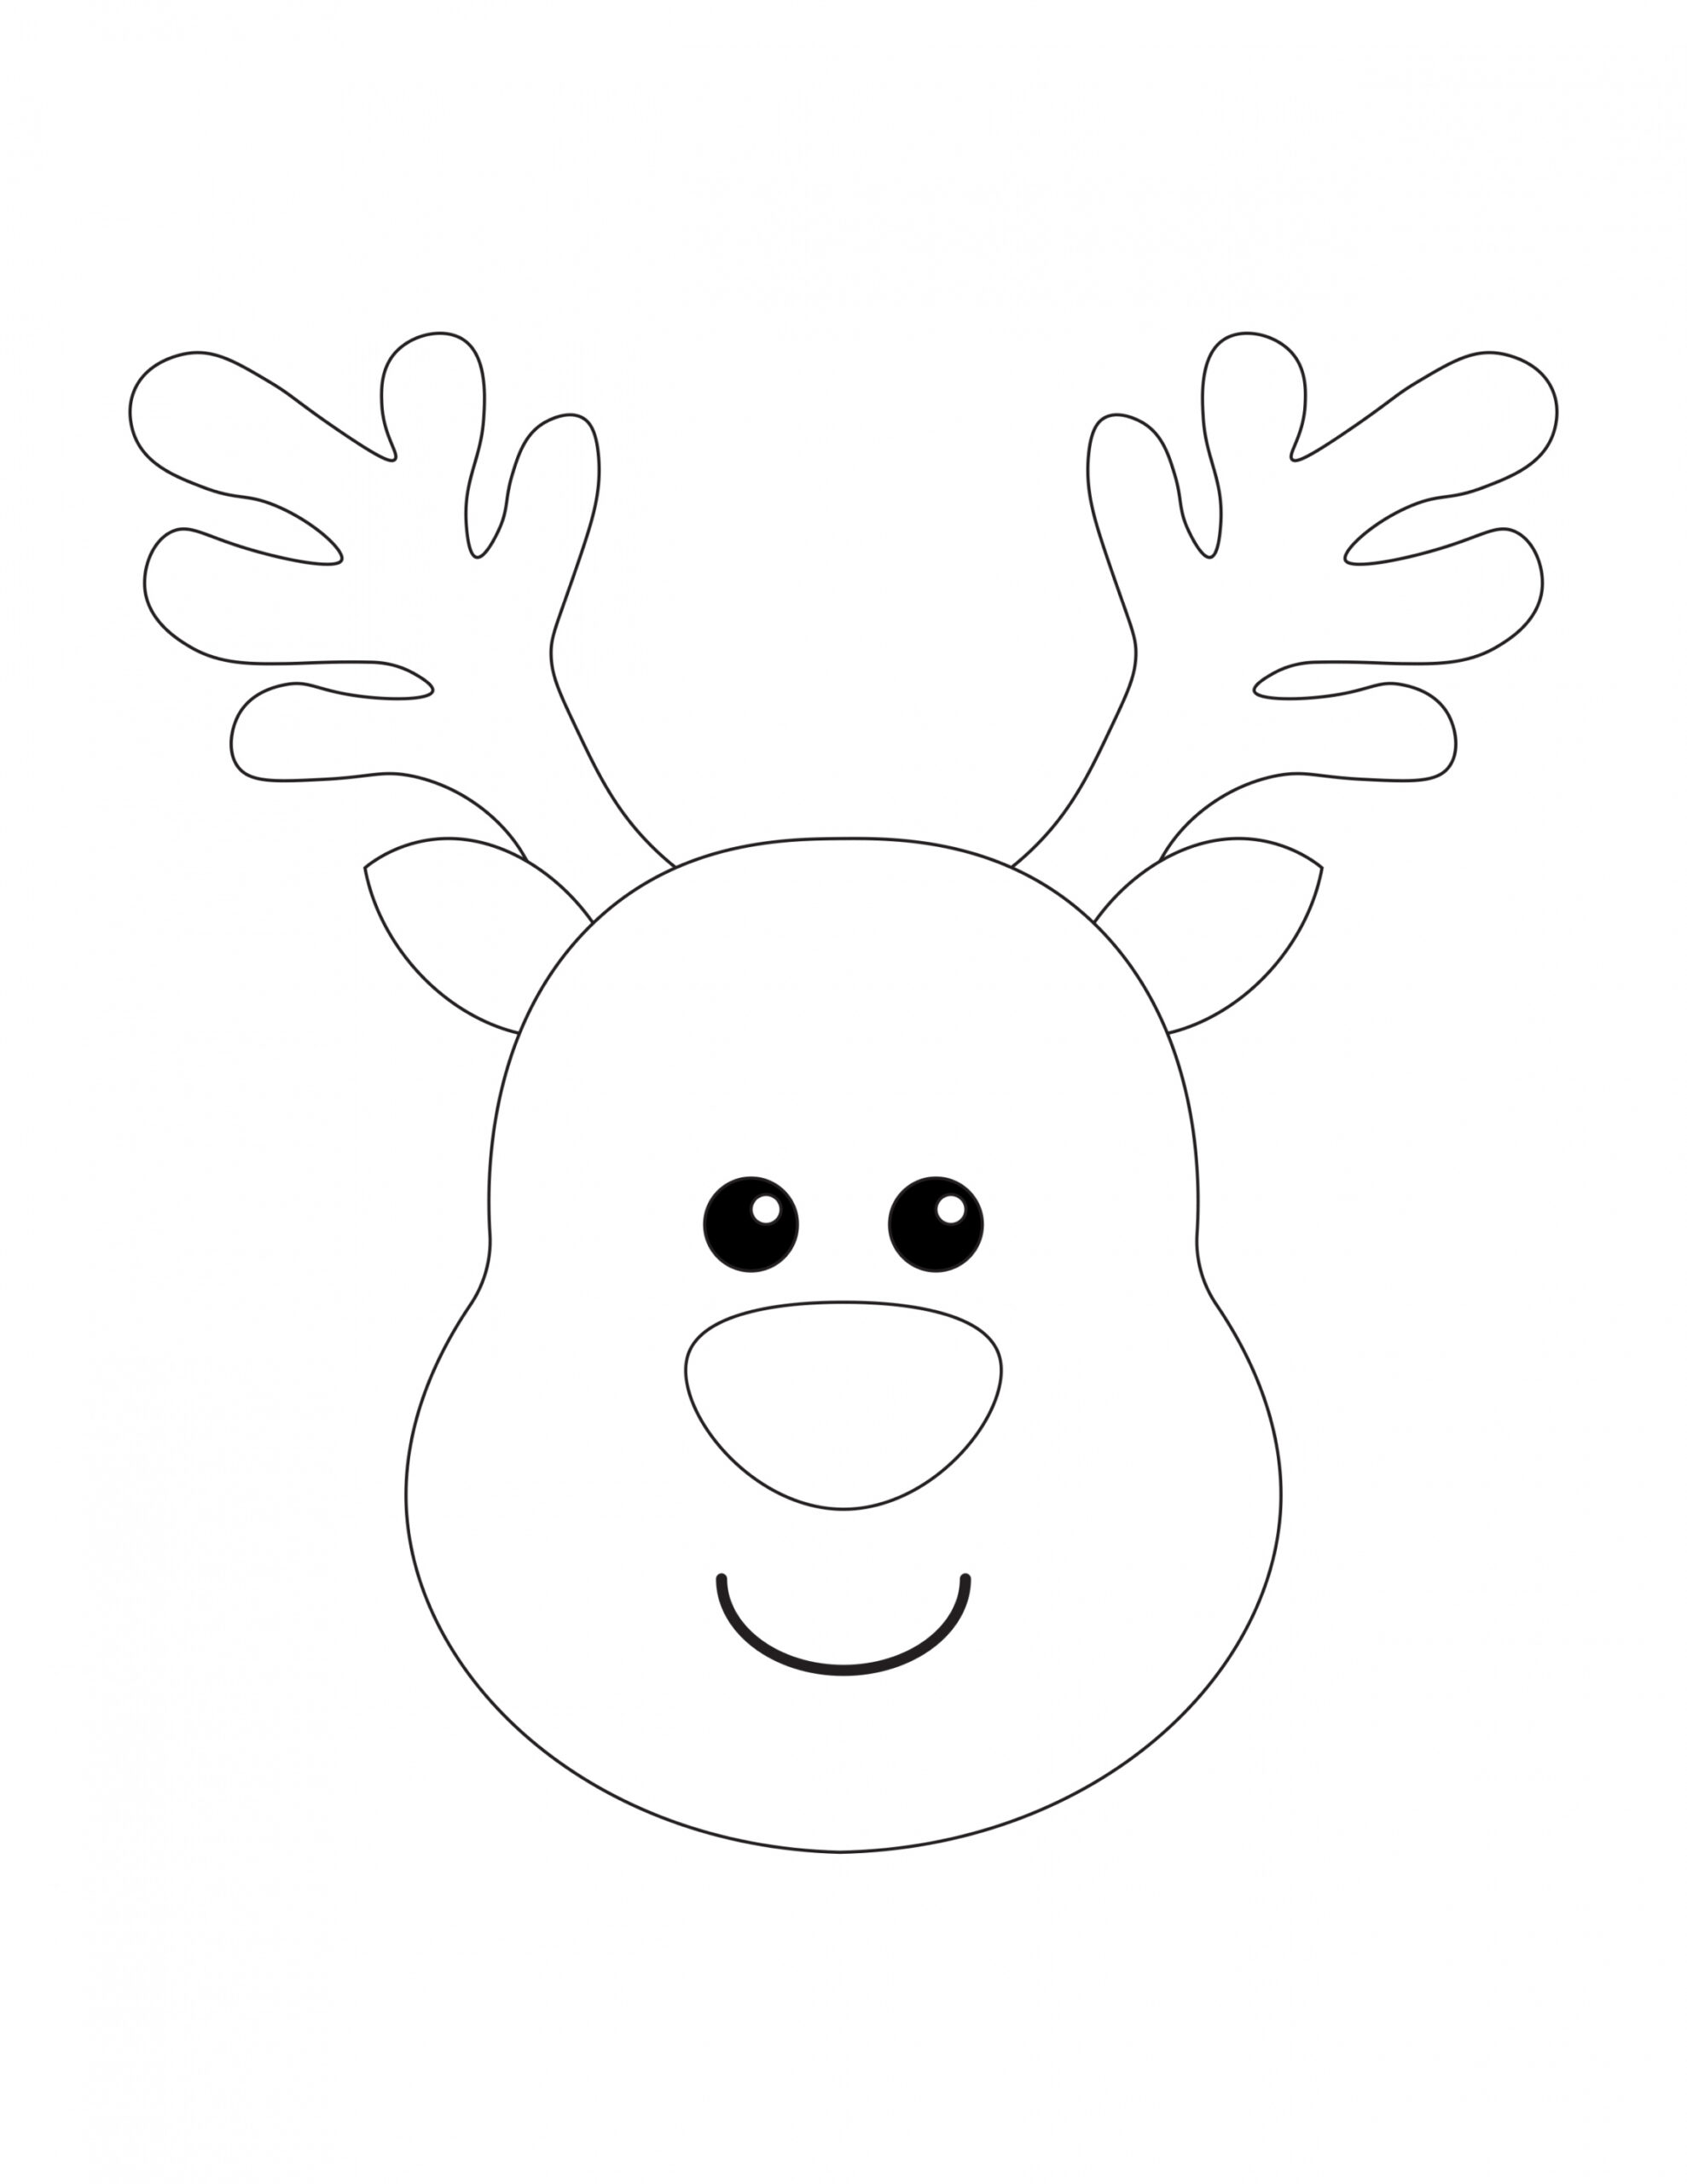 Free Printable Reindeer Templates - Daily Printables - FREE Printables - Reindeer Head Template